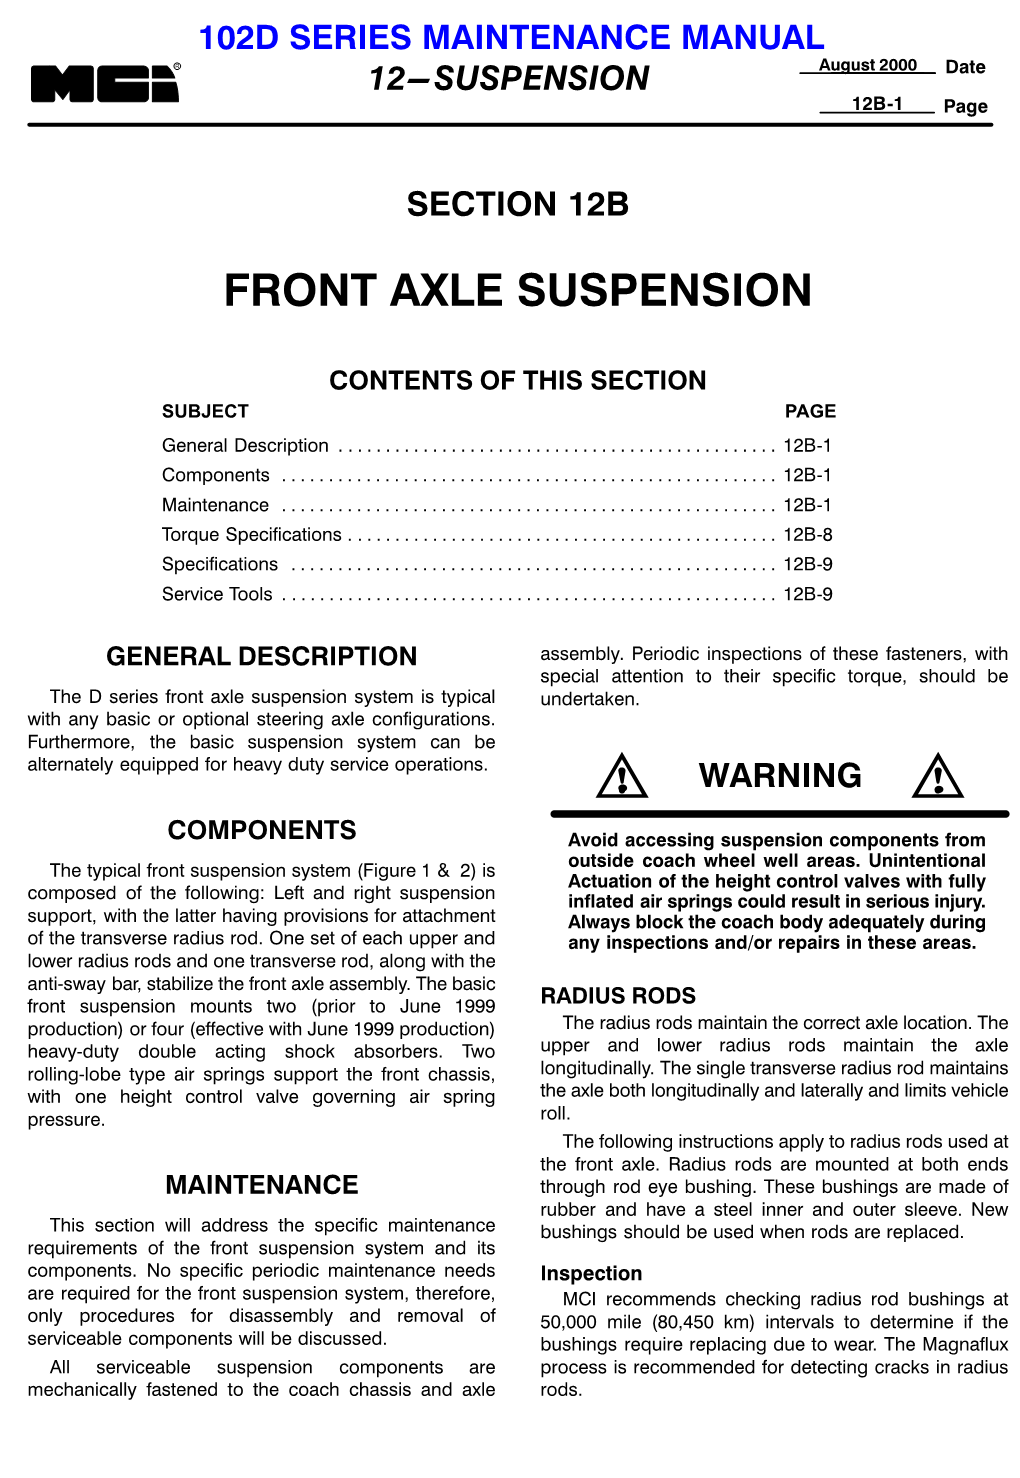 Front Axle Suspension, 12B 1